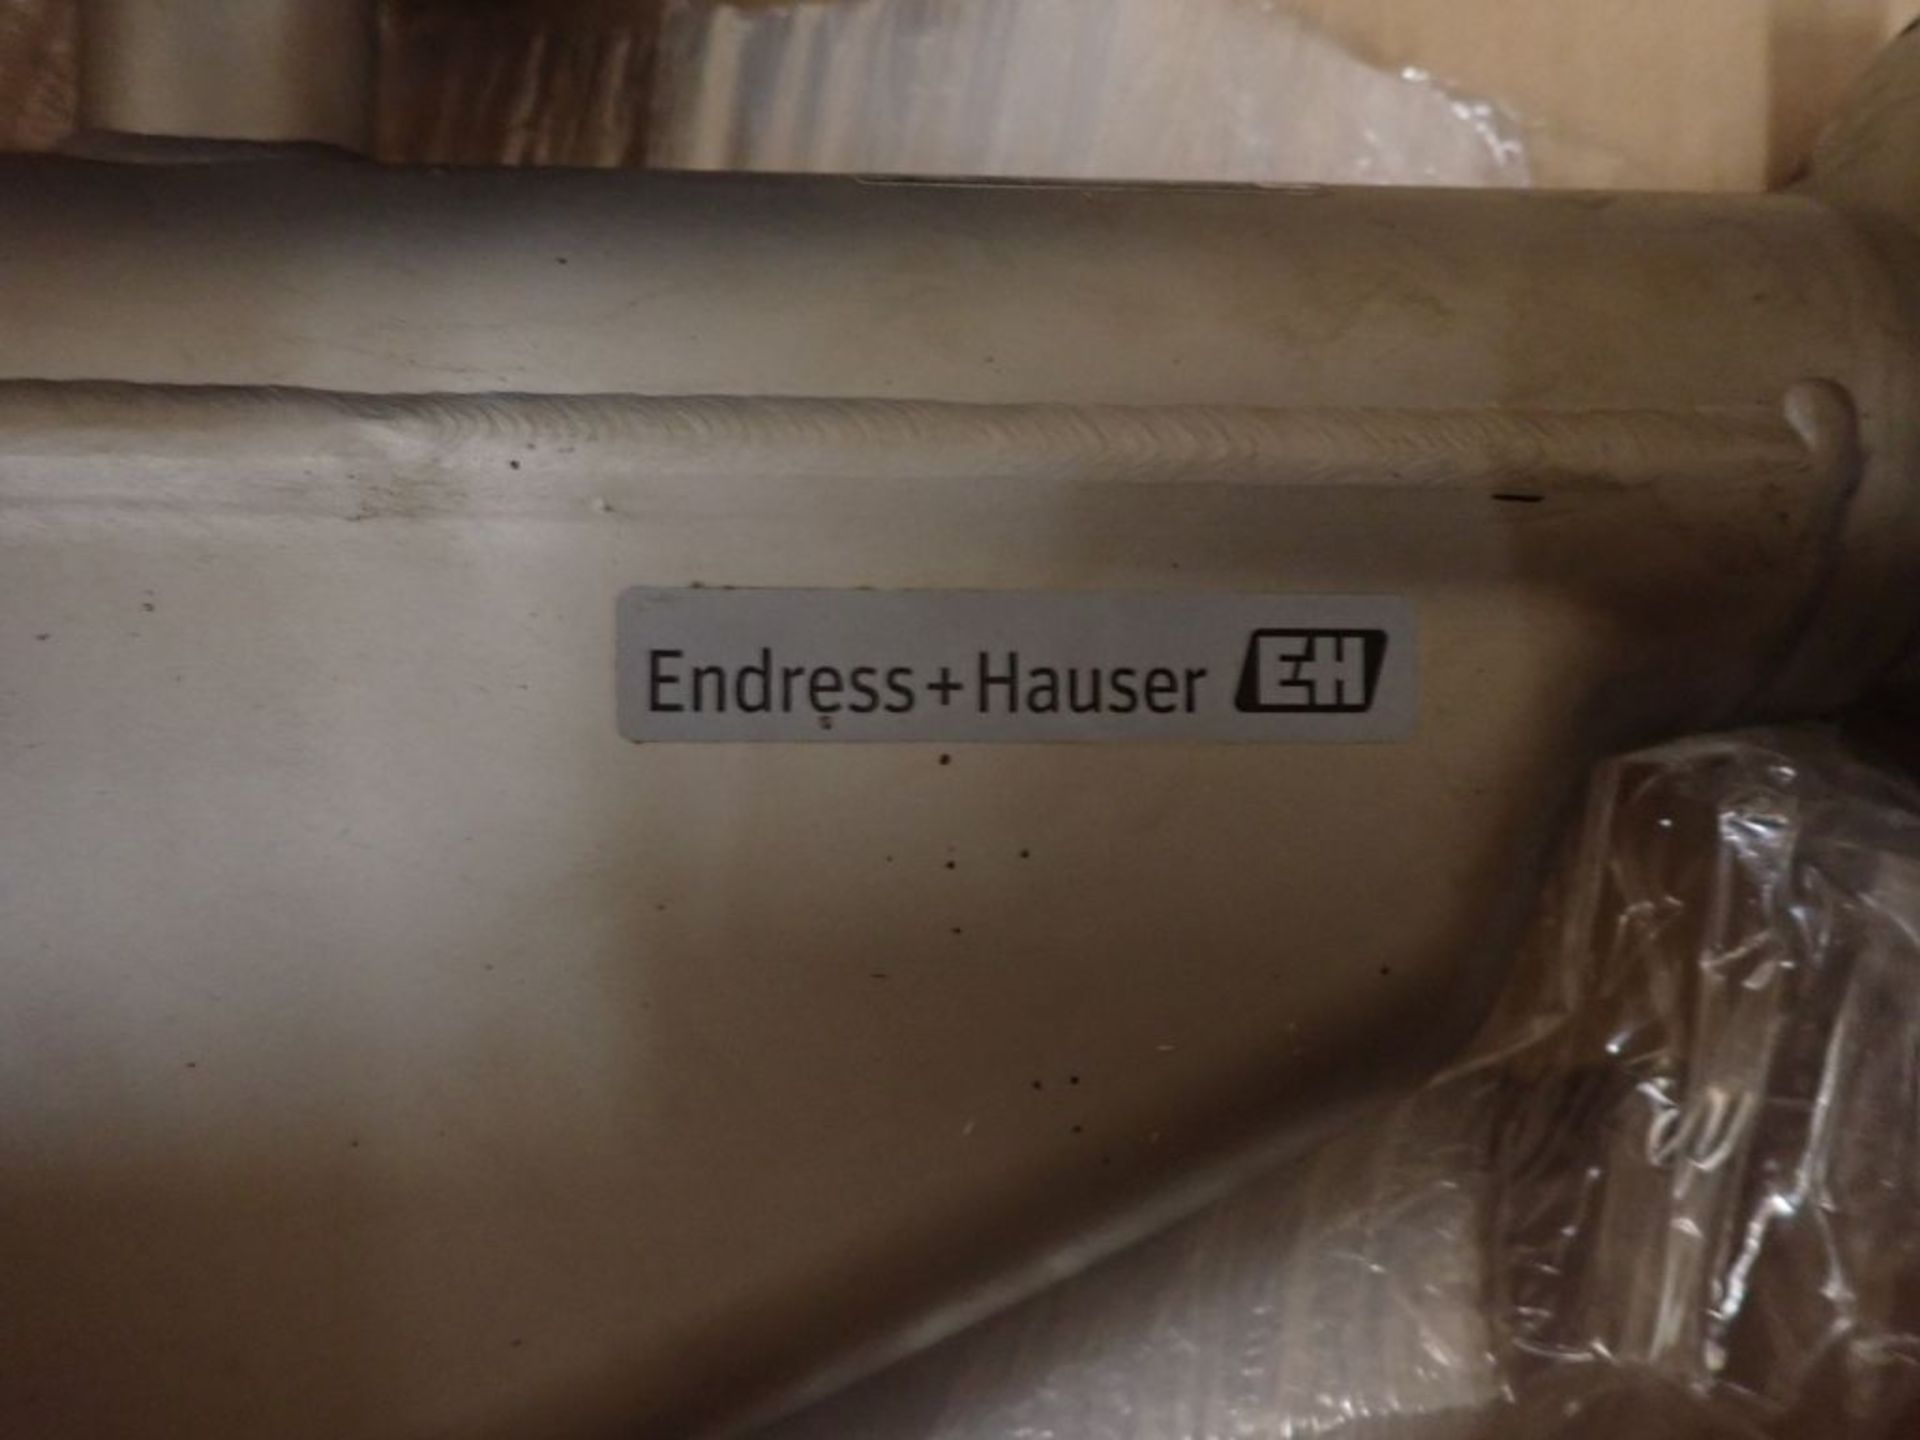 Endress Hauser Promass - Part No. AAINADAFADSAAASHAI; Tag: 222537 - Image 2 of 6